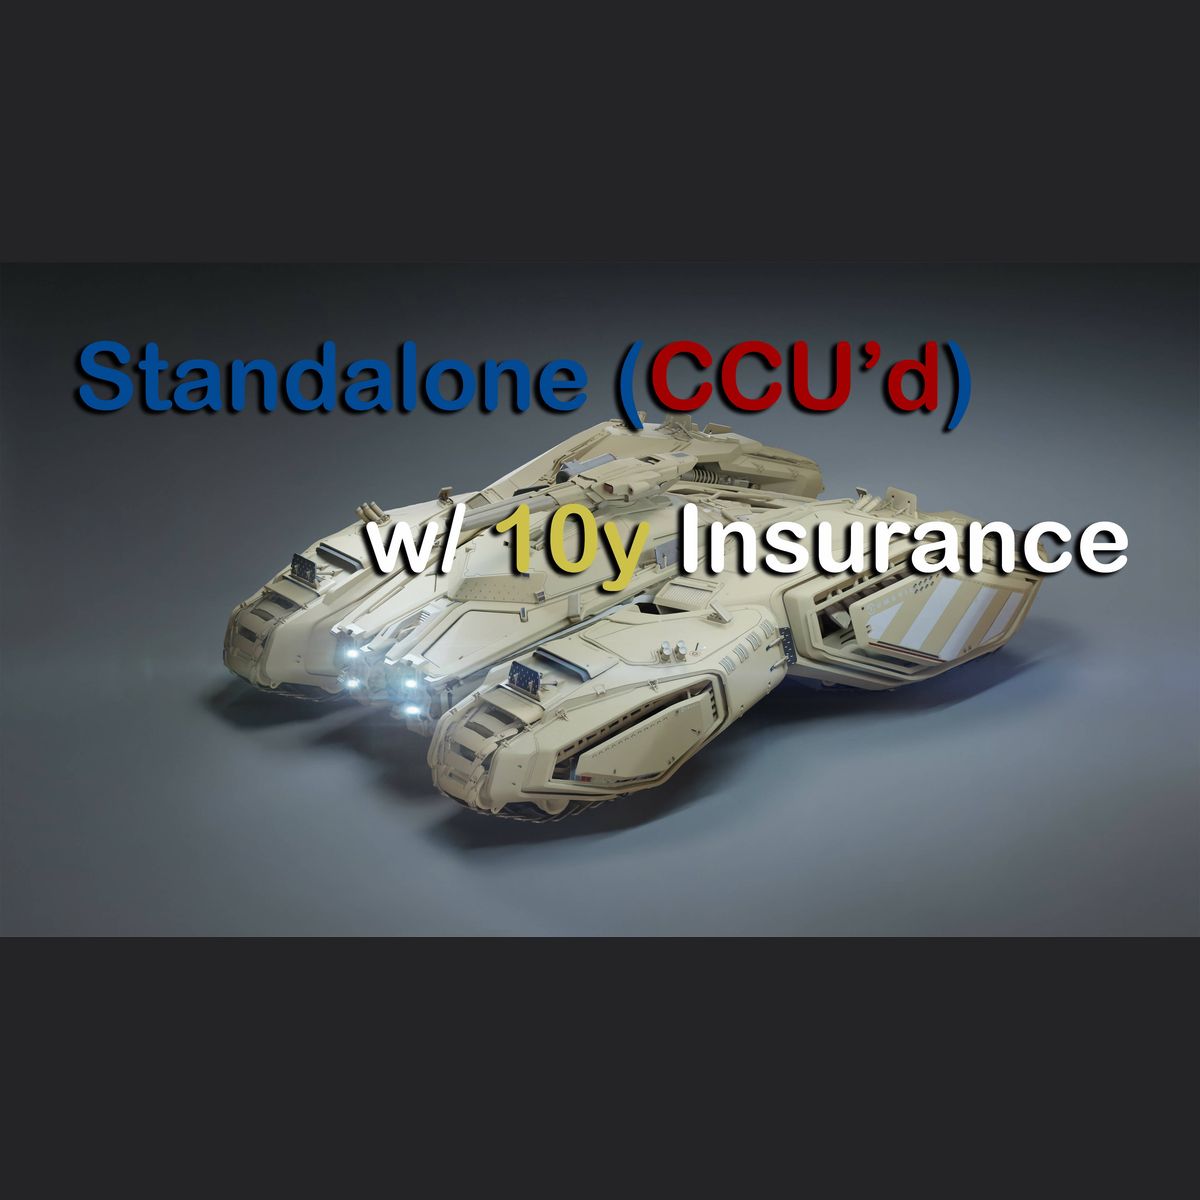 Storm - 10y Insurance